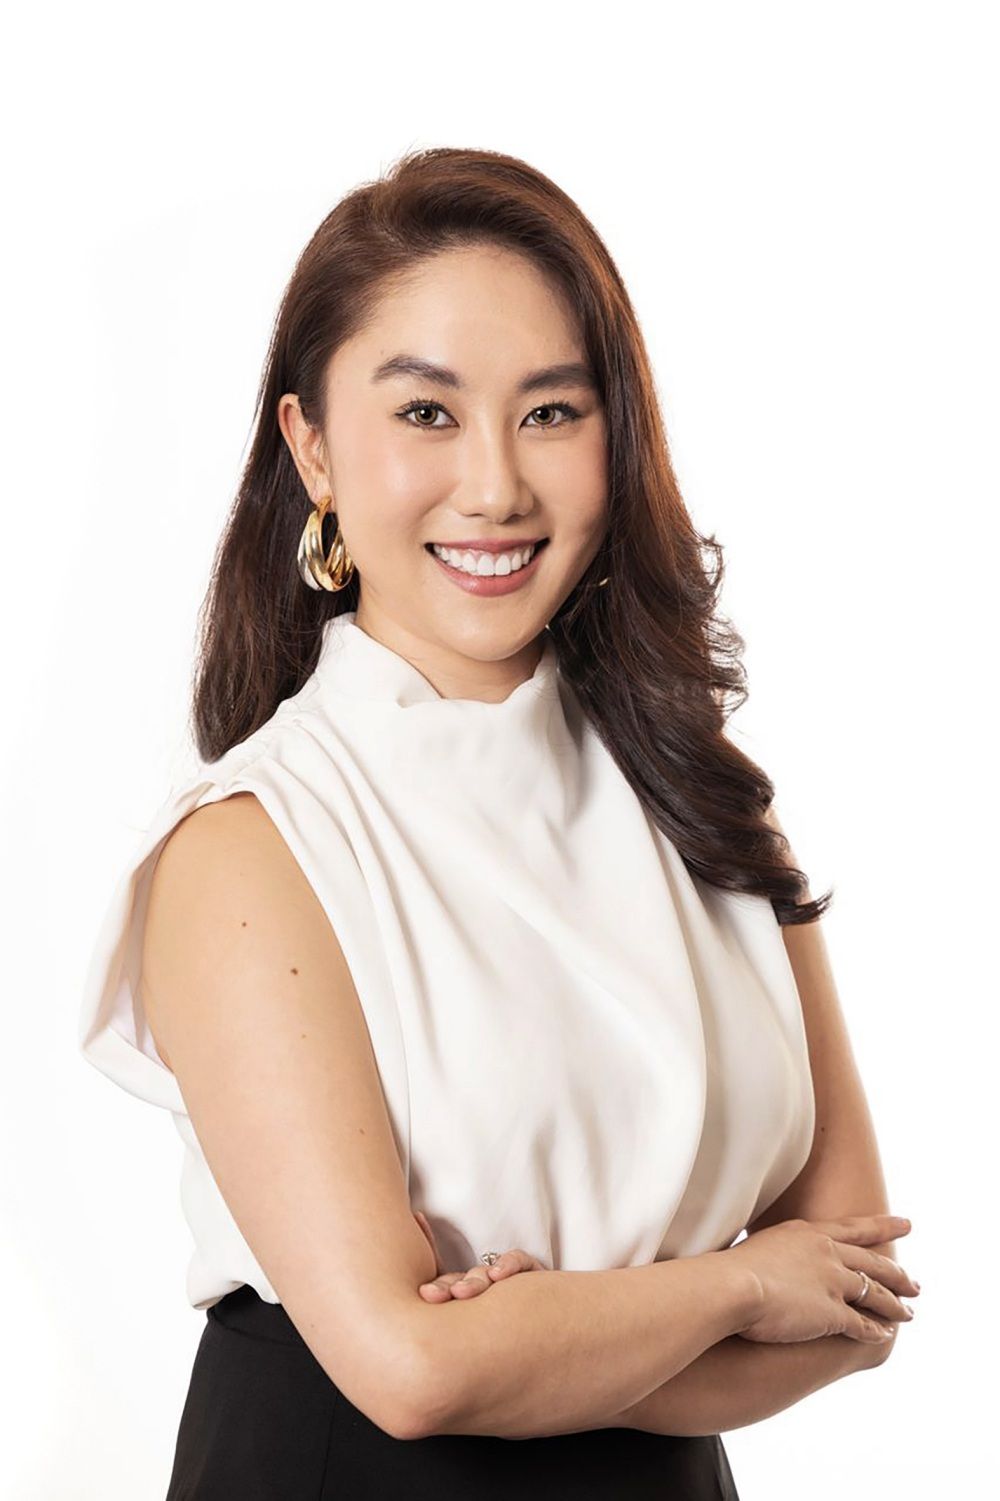 Megan Lam, co-founder of Neurum Health